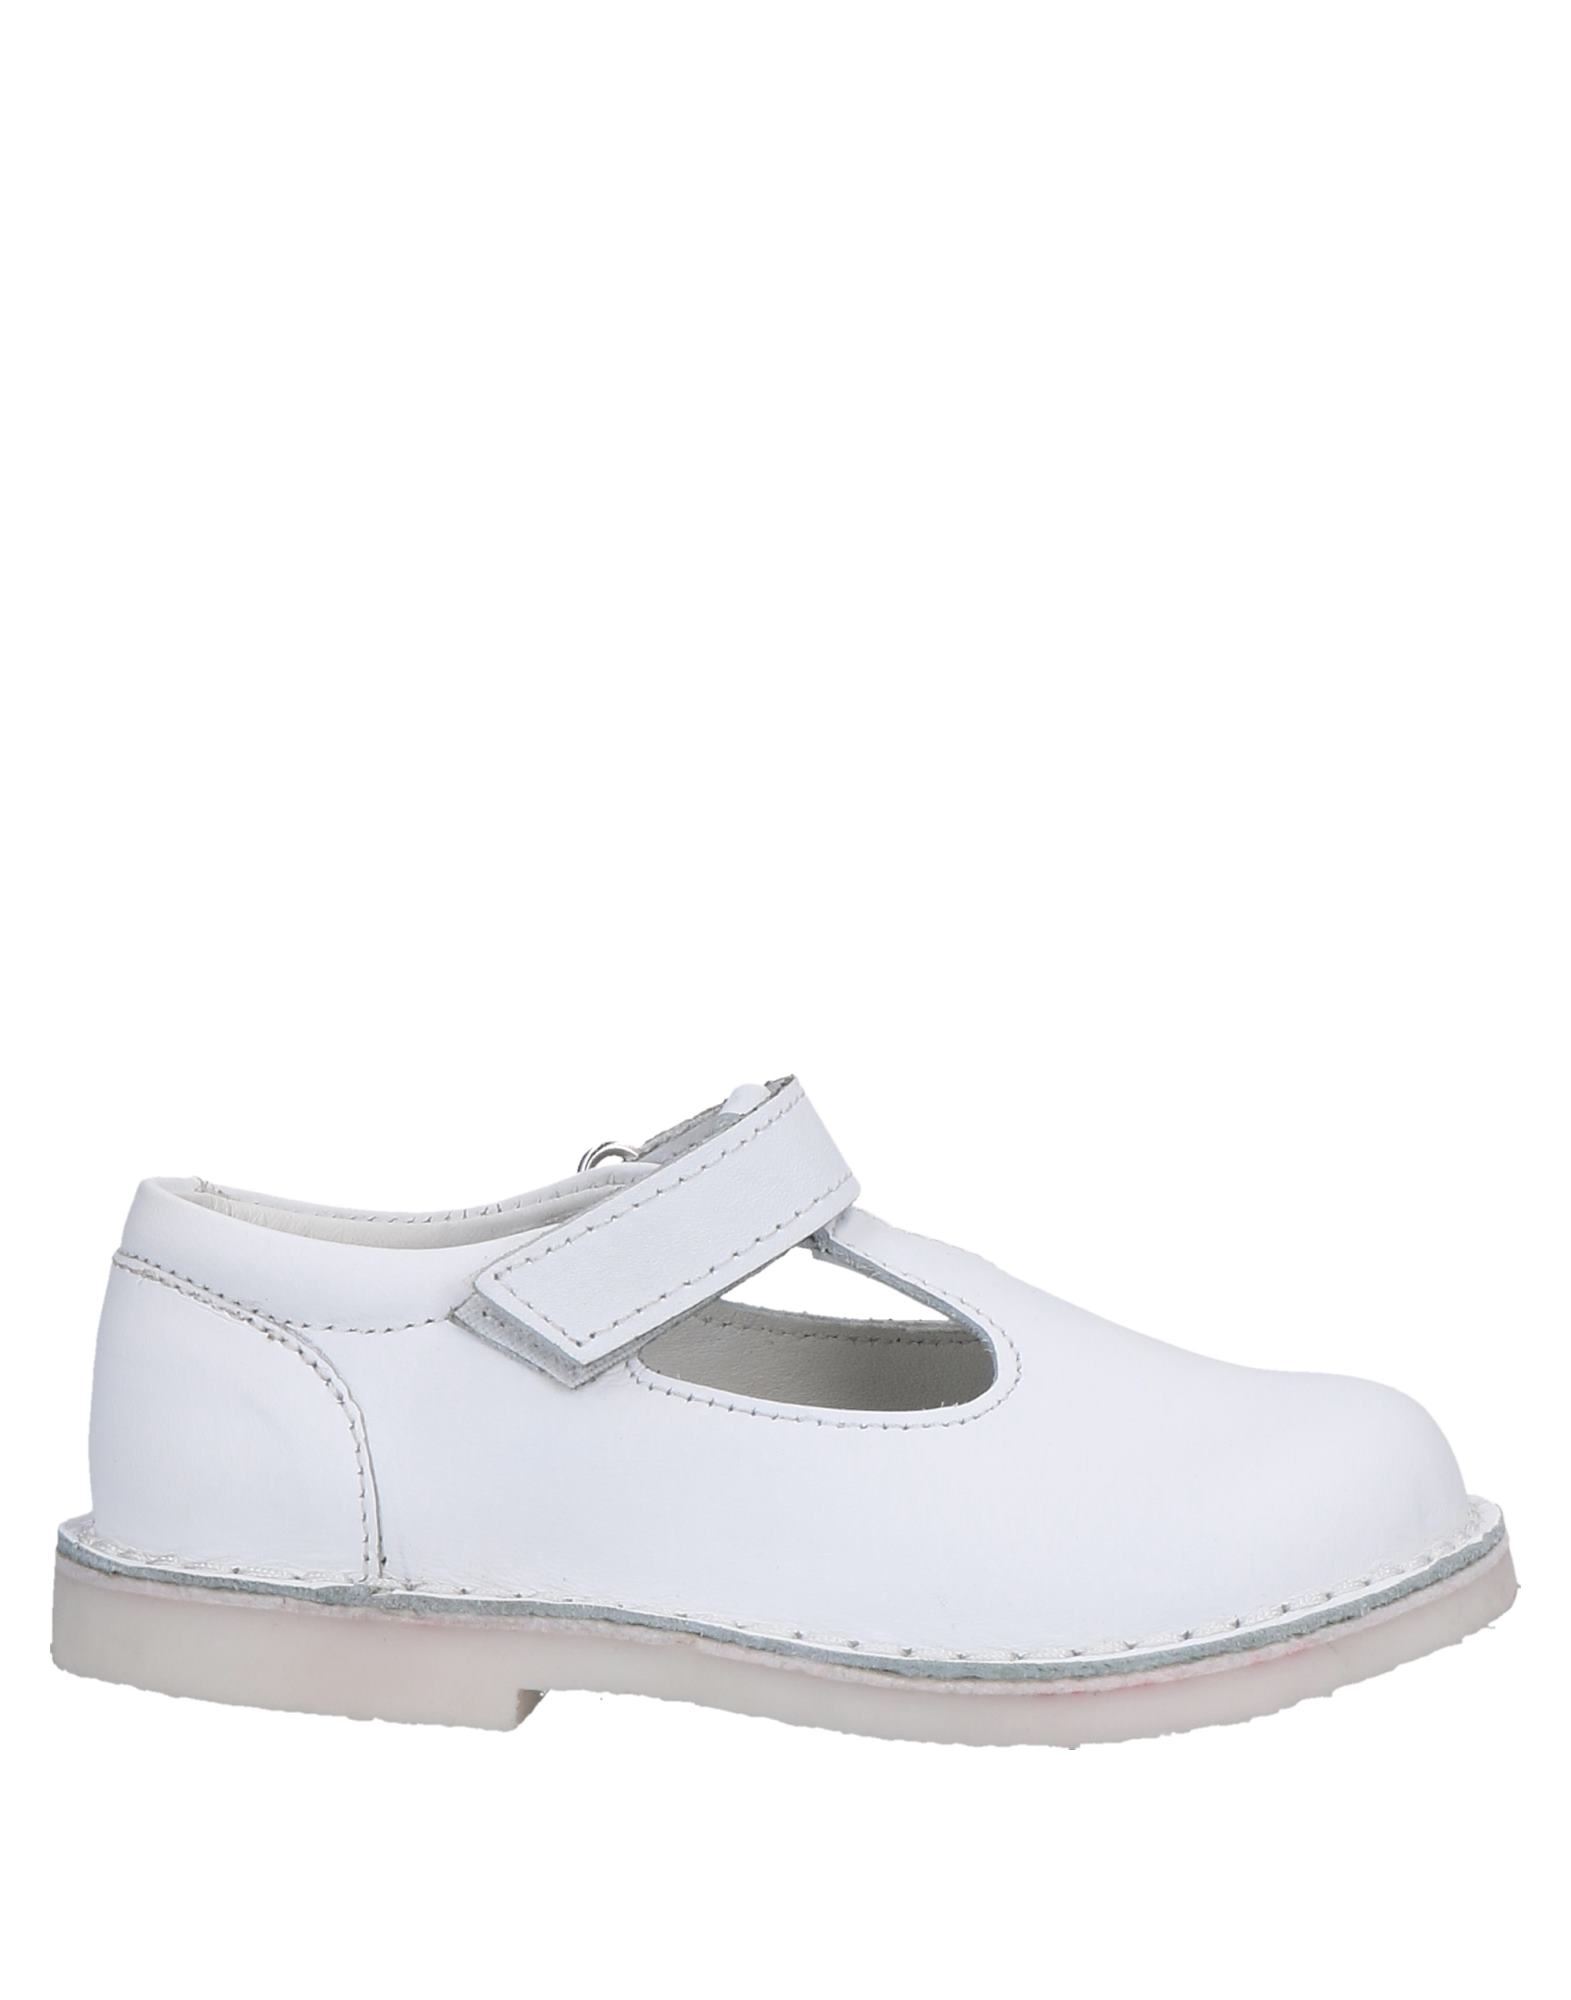 Oca-loca Kids' Sandals In White